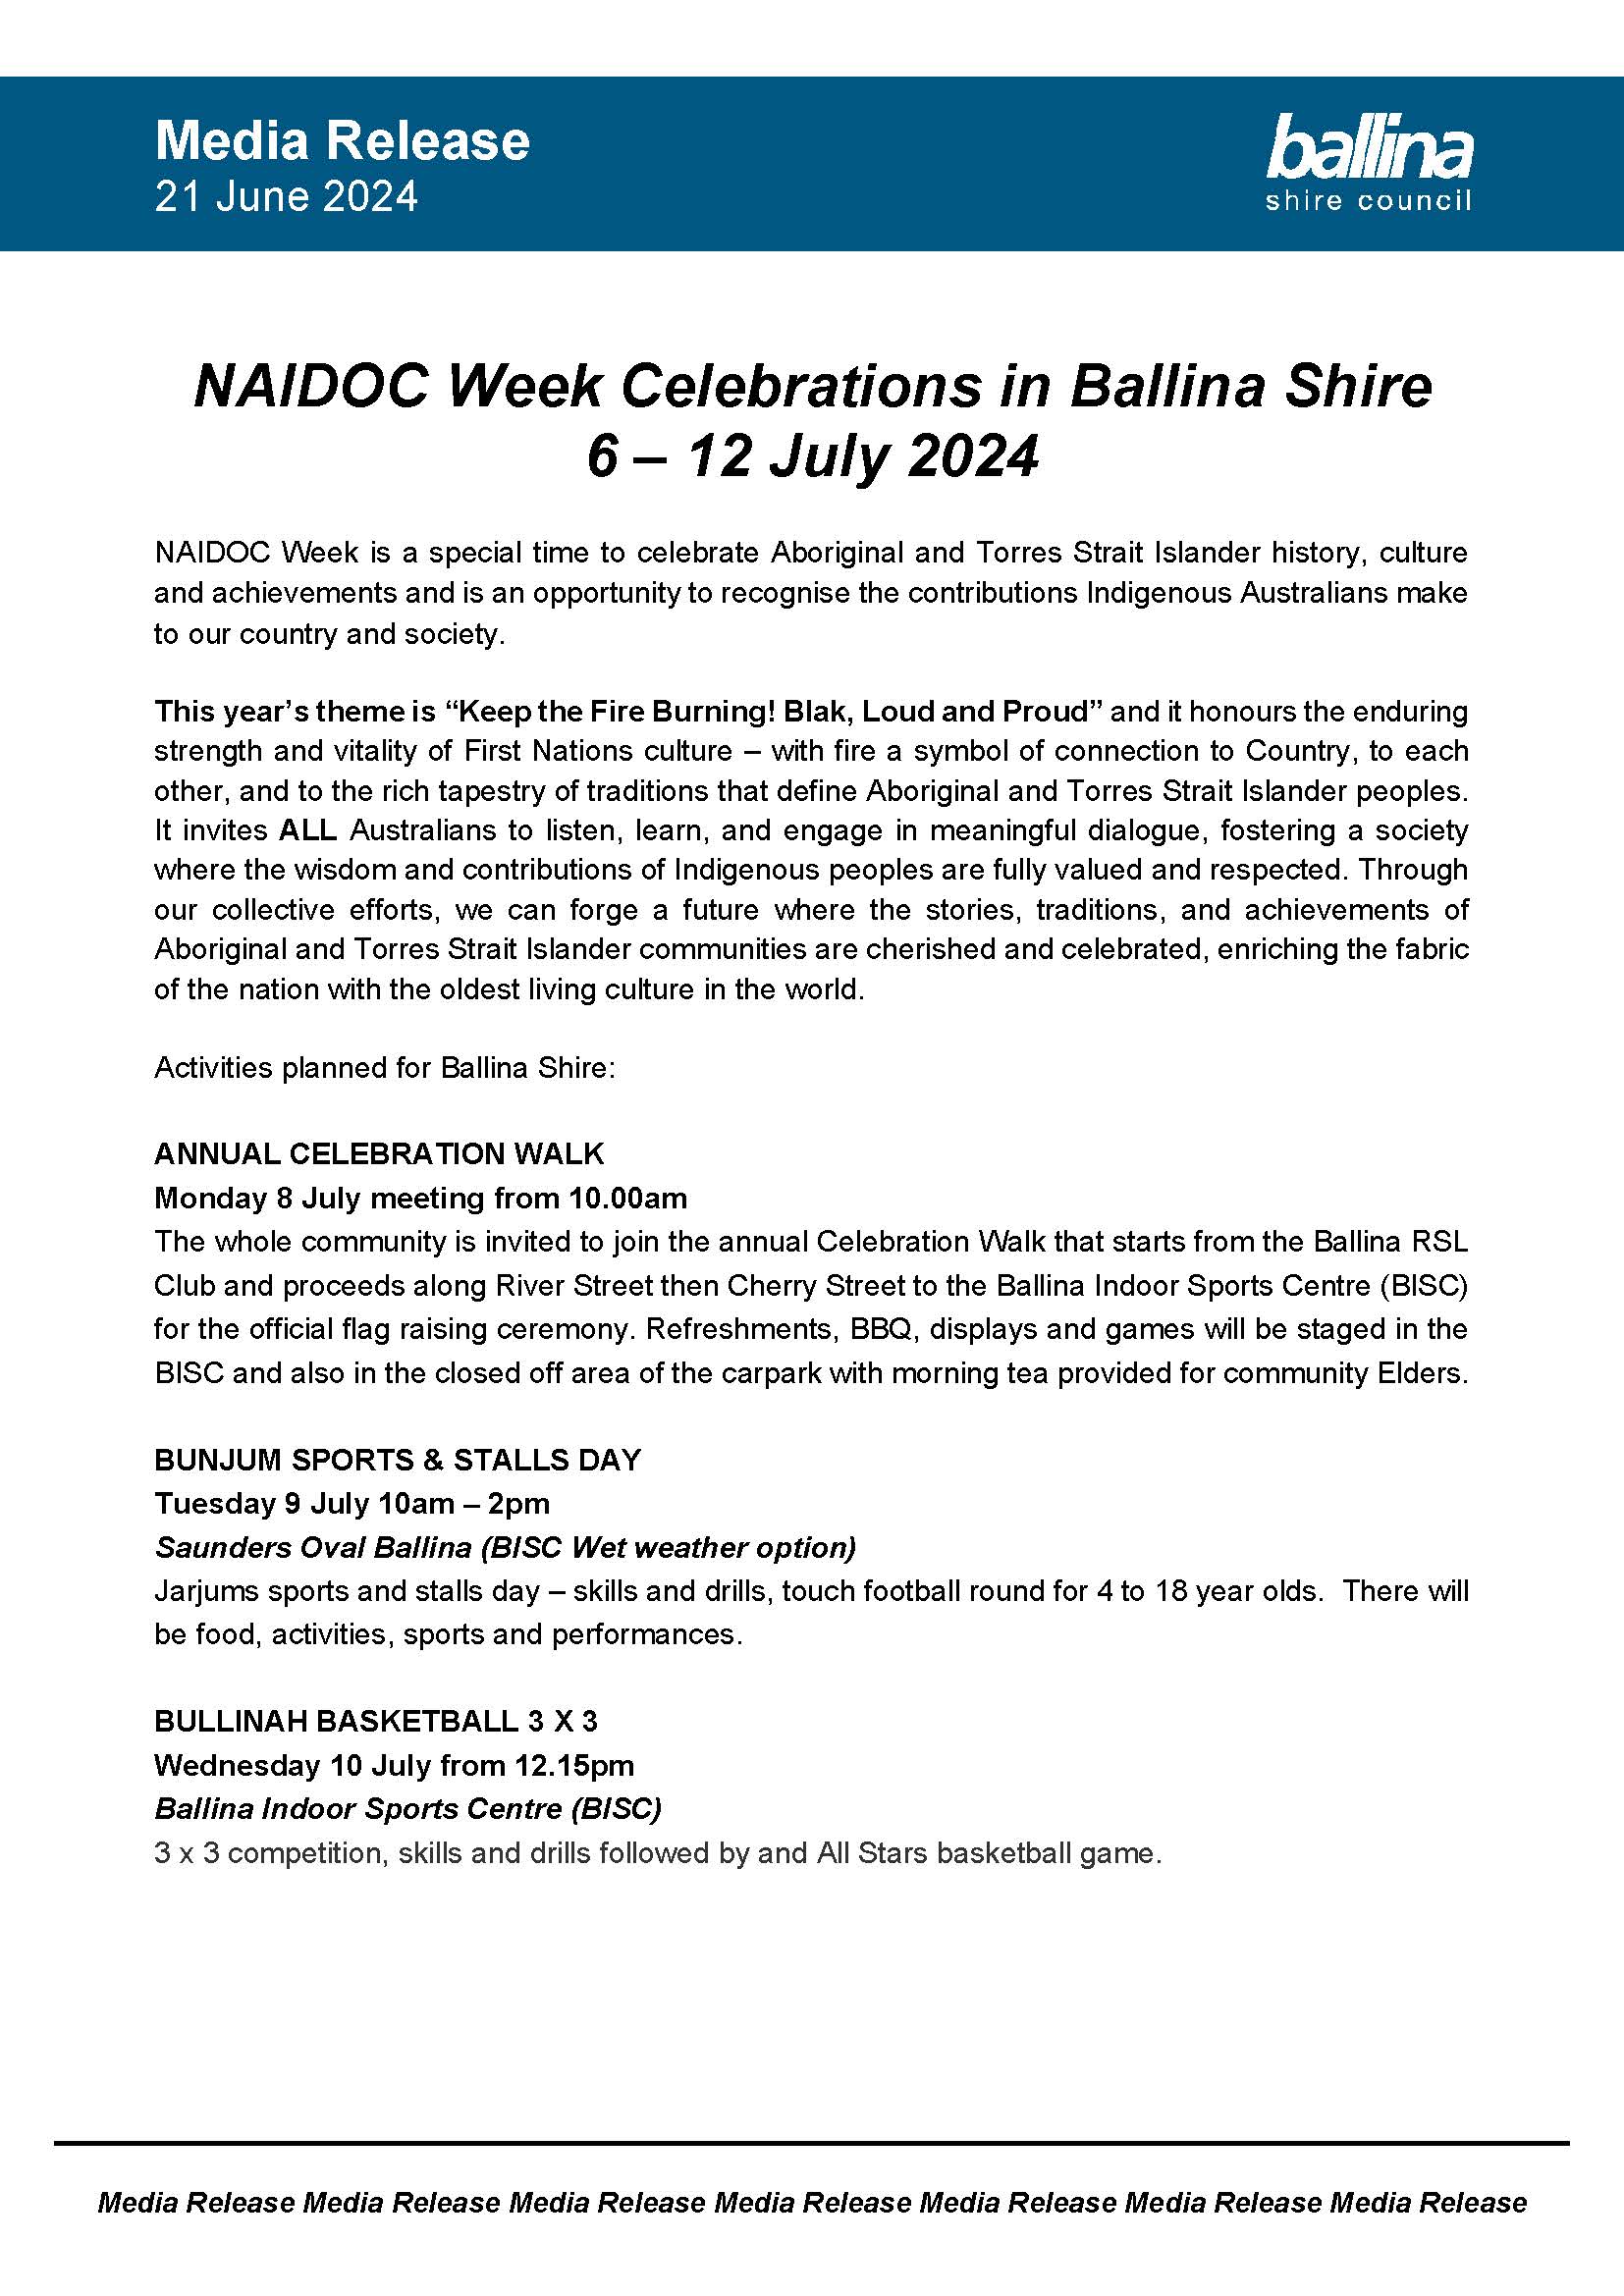 2024 NAIDOC Week - Media Release_Page_1